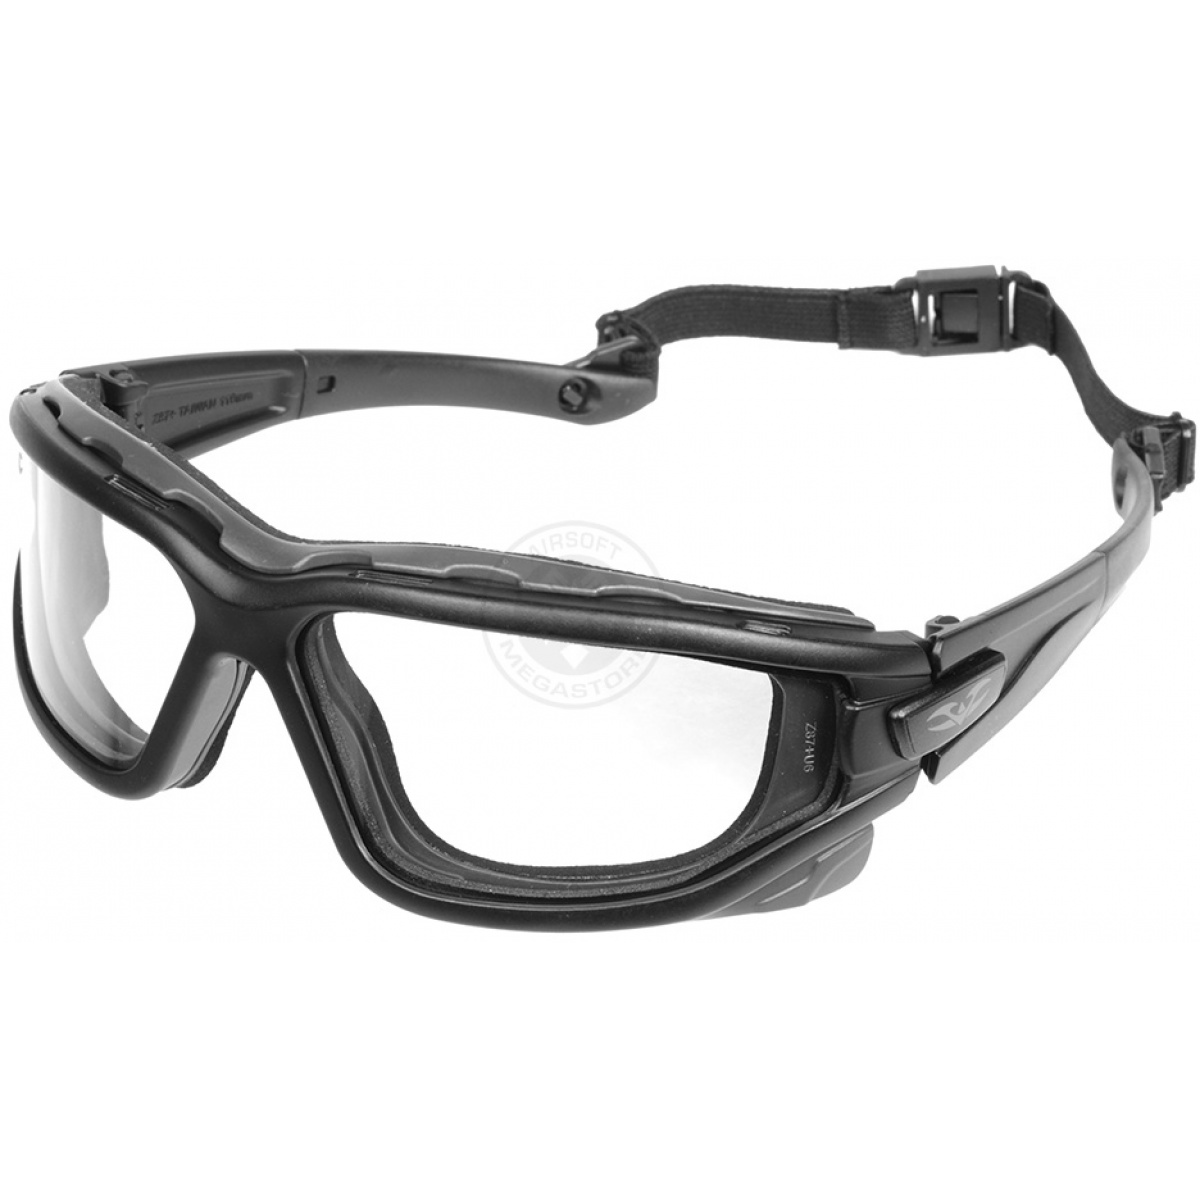 Valken Zulu Tactical Goggles Airsoft Dual Pane Grey Lens Free Shipping 